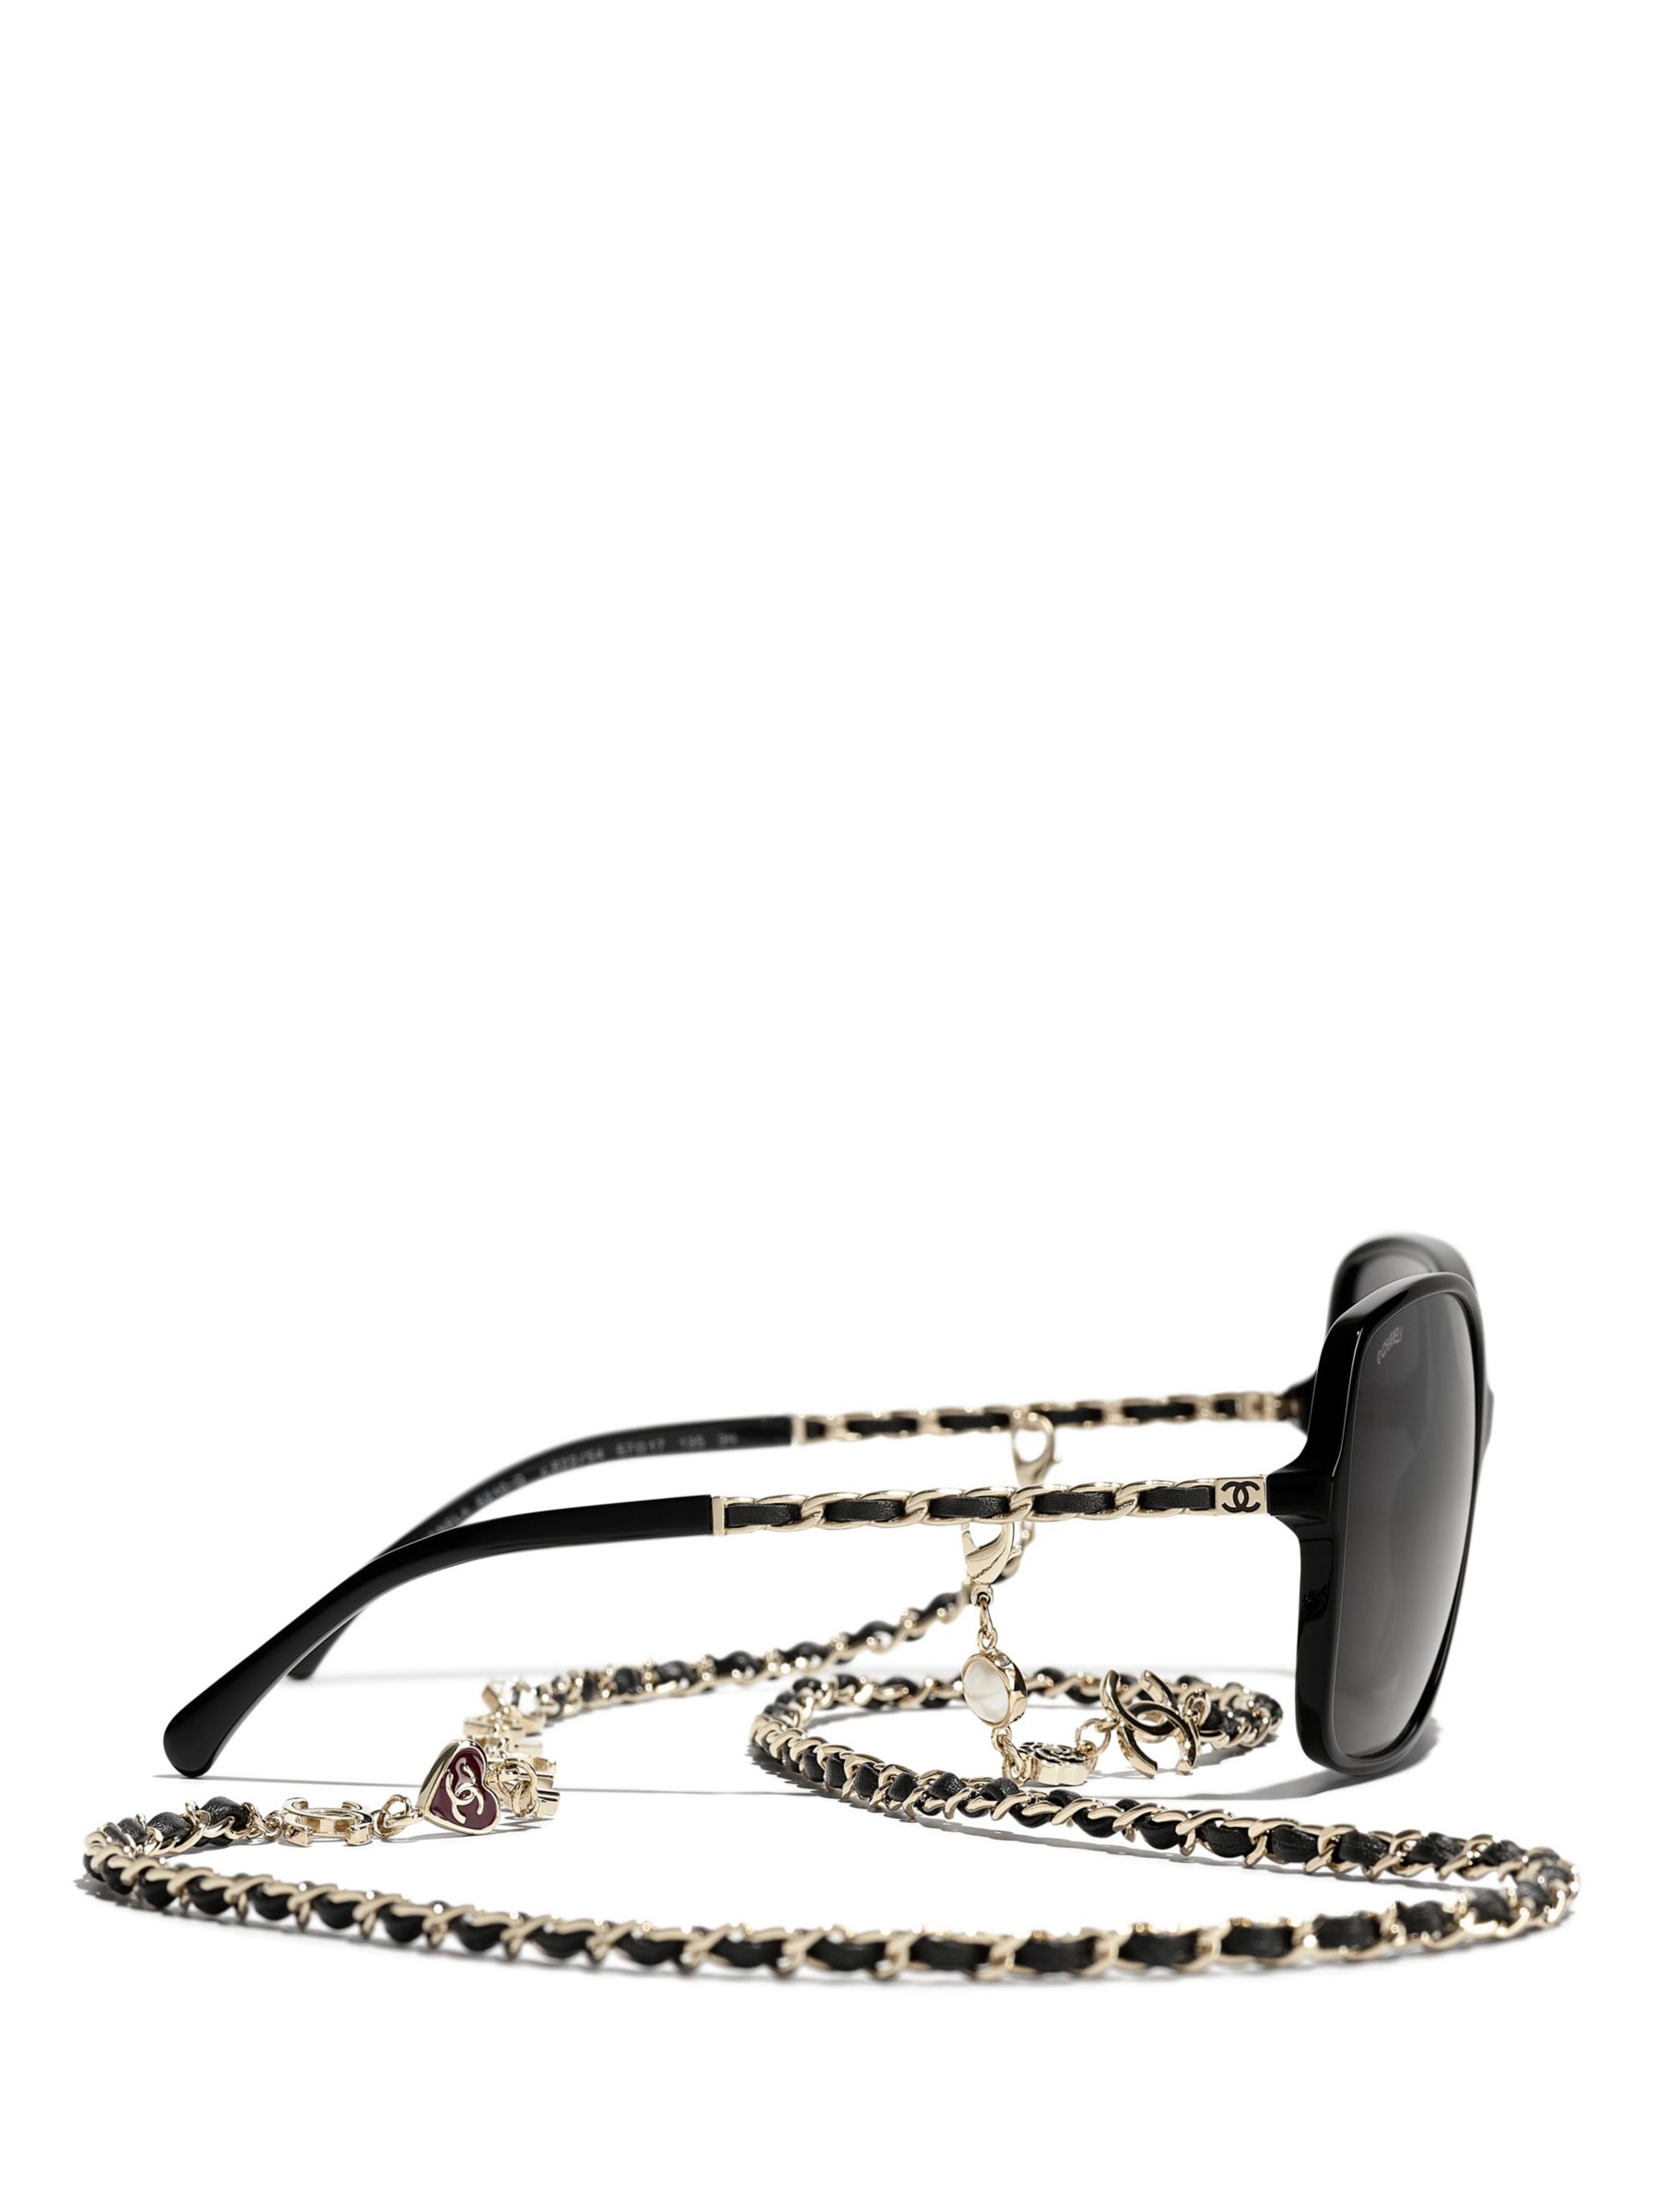 Buy CHANEL Square Sunglasses CH5210Q Black/Grey Online at johnlewis.com